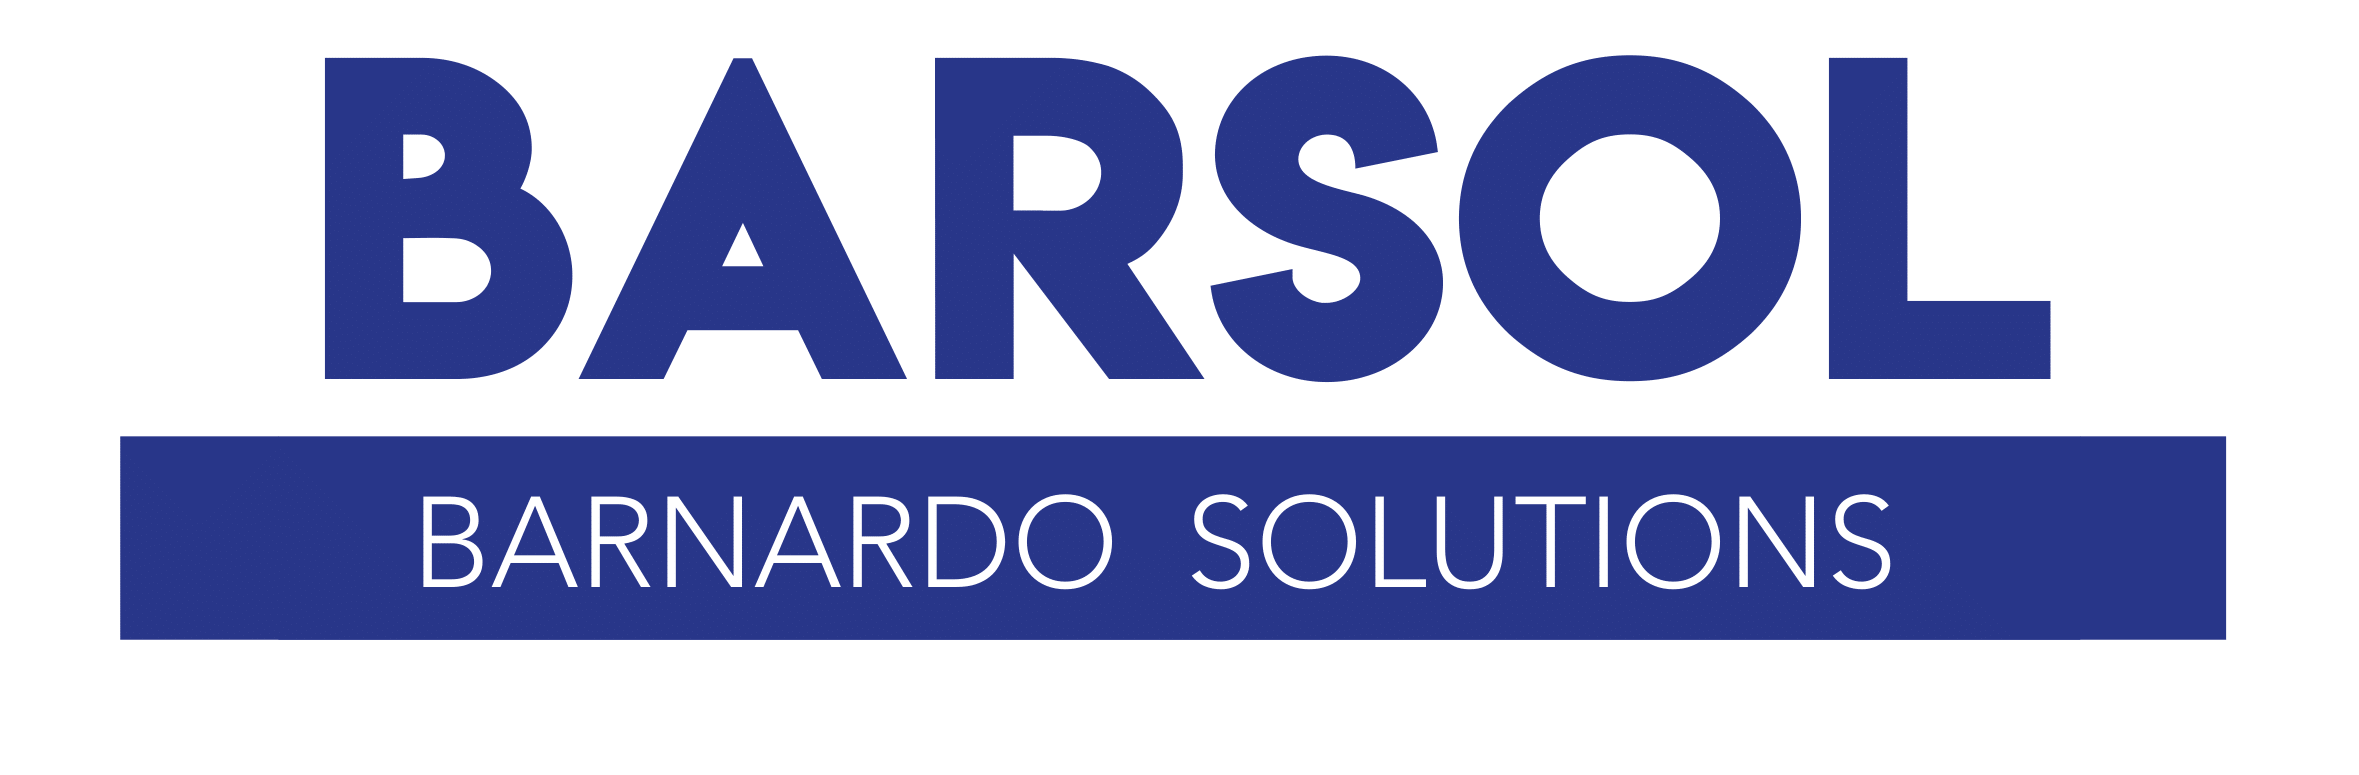 Barsol_logo-1